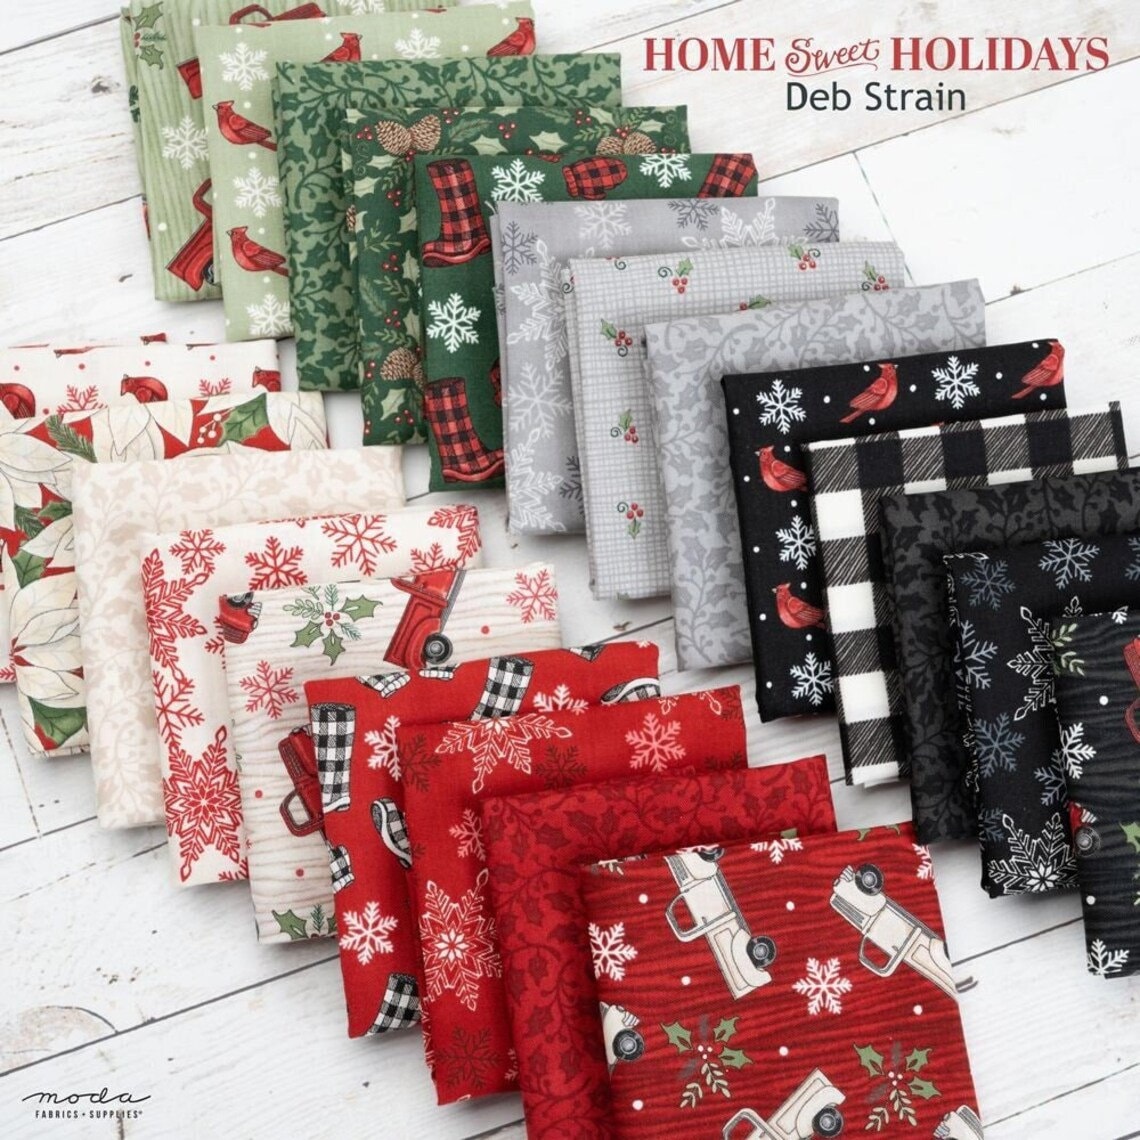 Quilt Fabric, Holidays at Home, Christmas Fabric, Winter Fabric, Cardinals,  Chickadees, Pine Cones, Holly Berries, Deb Strain, Moda Fabrics